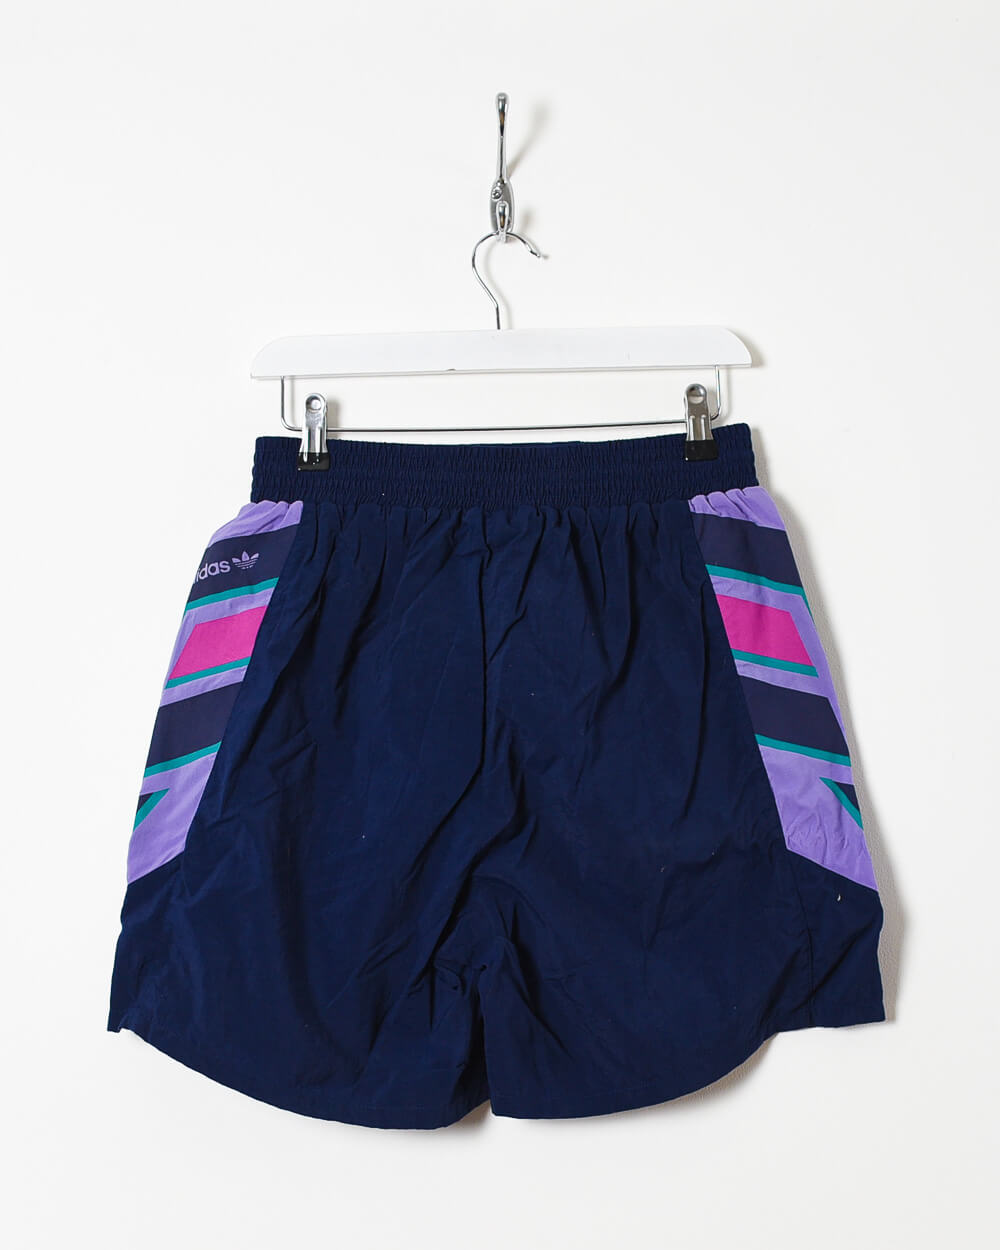 Navy Adidas Shorts - W30